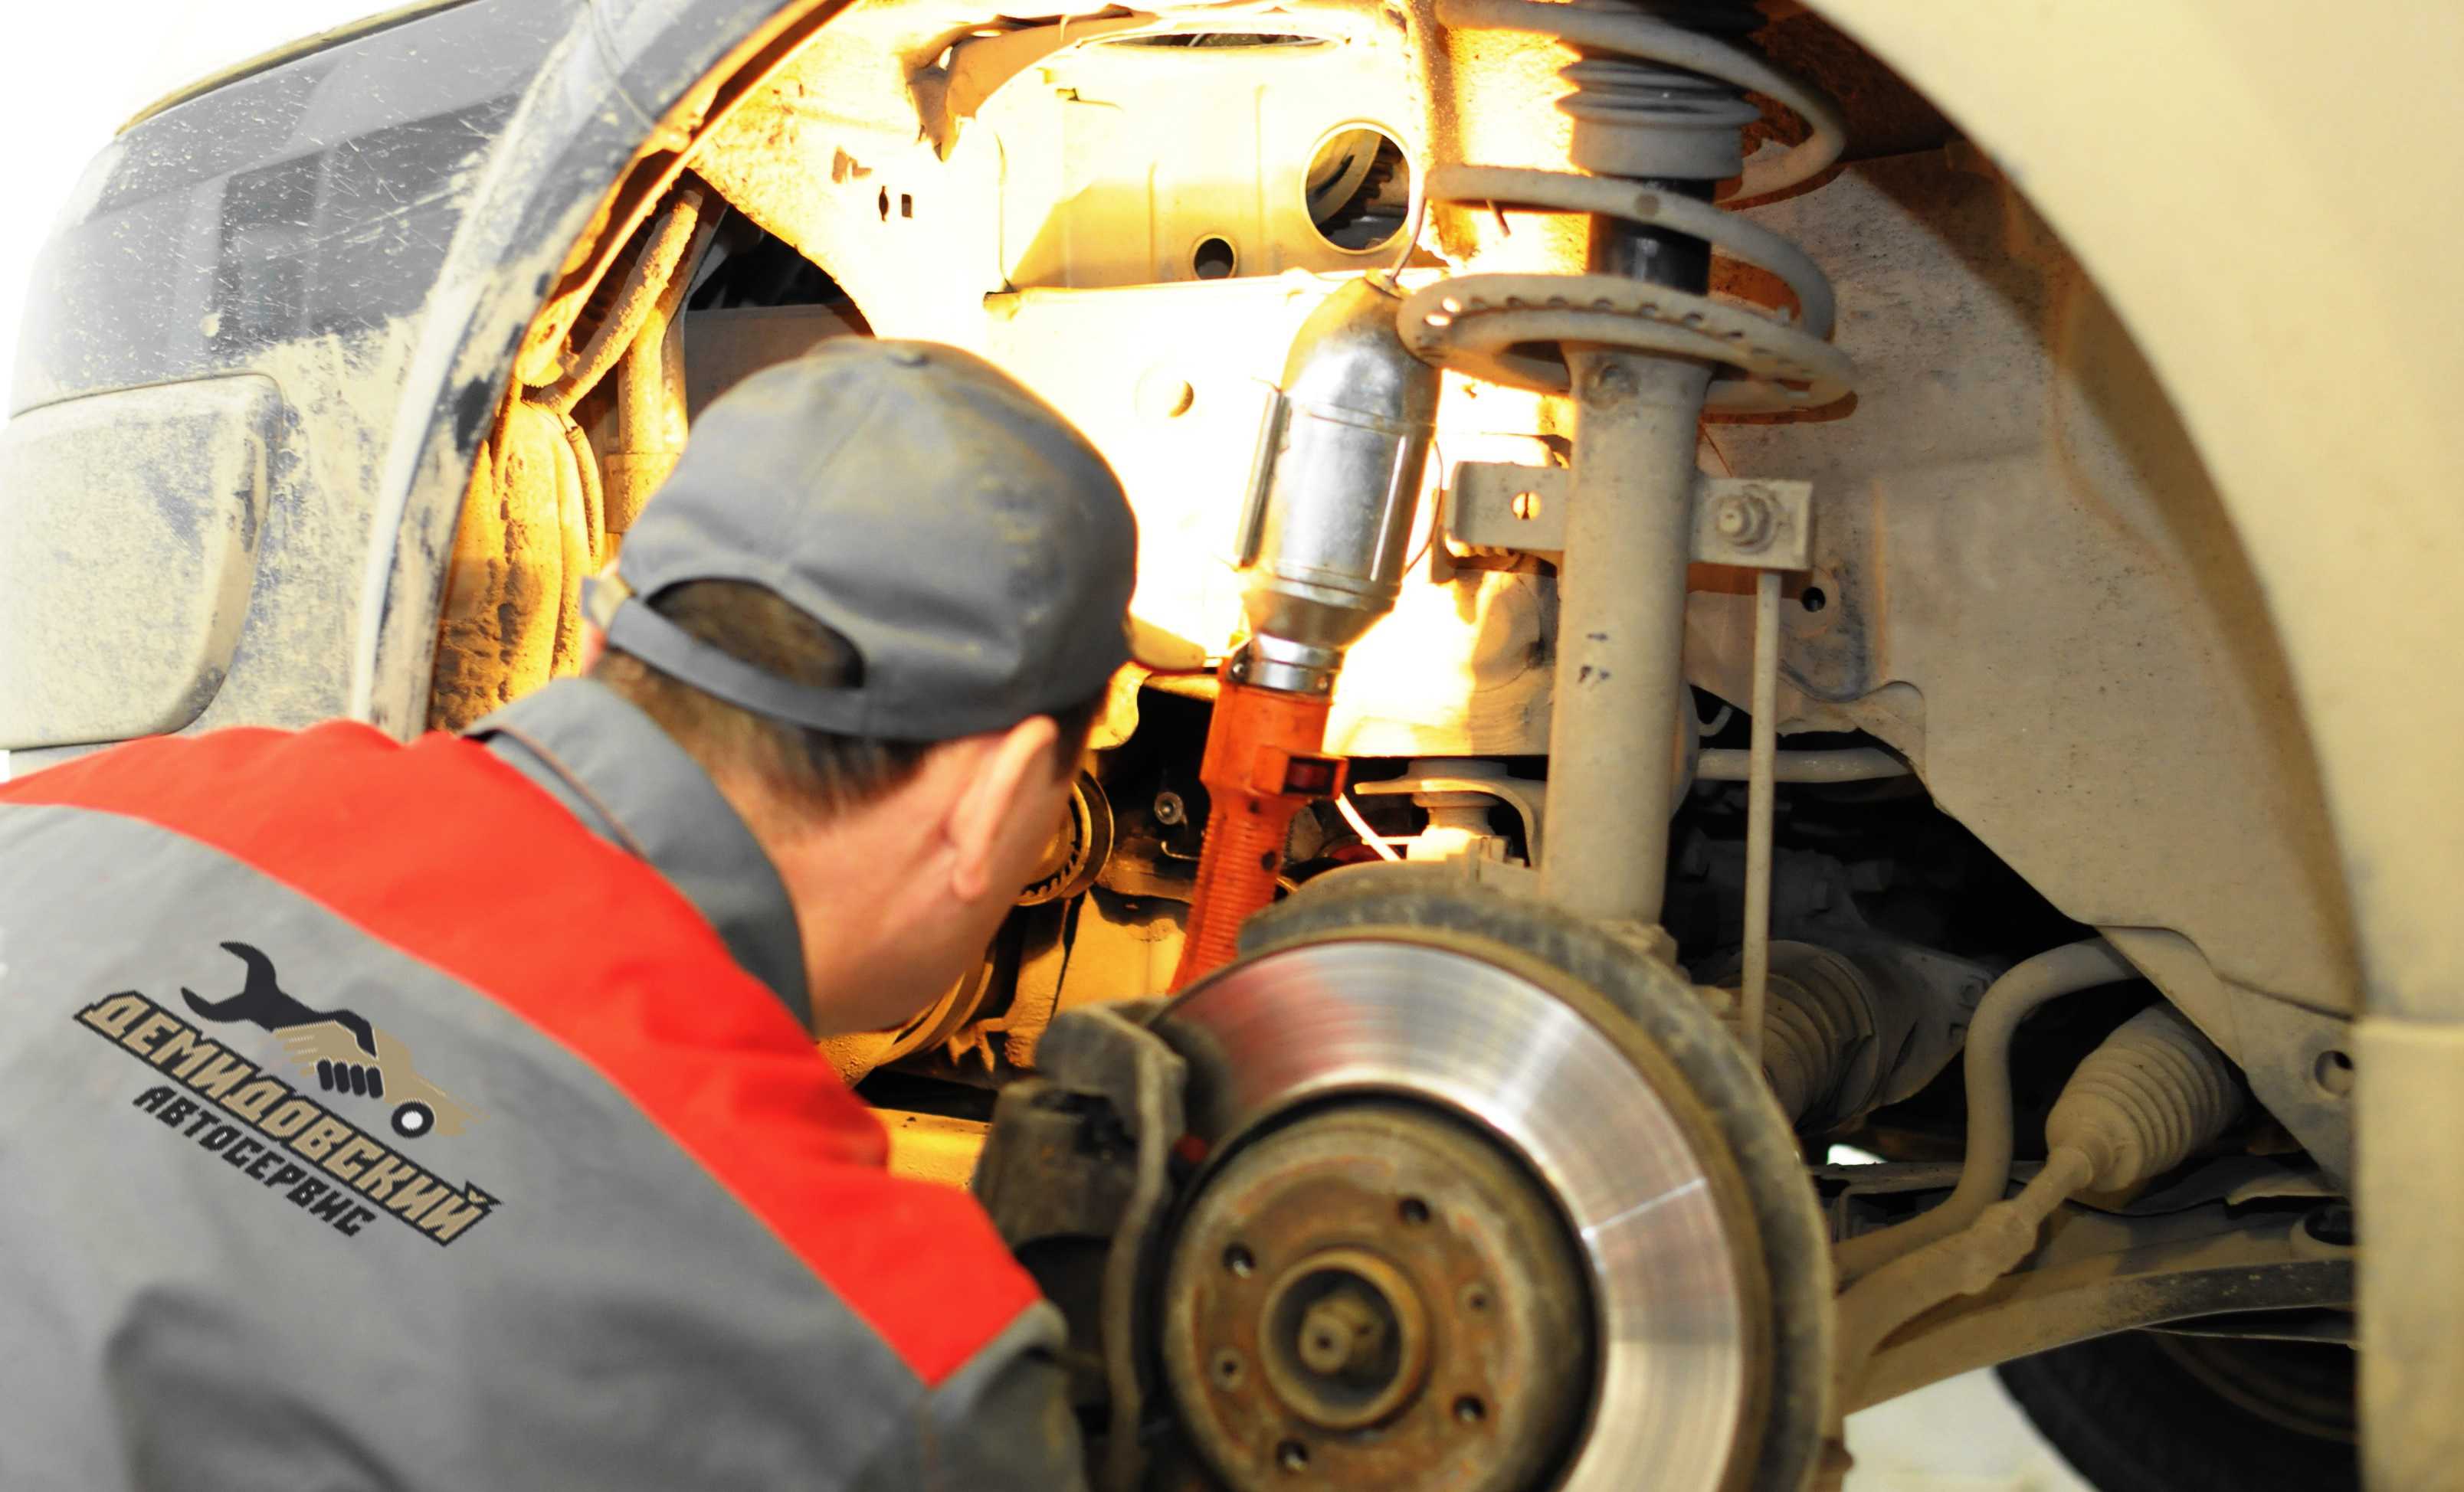 Лада приора с 2007 года, ремонт задних тормозов инструкция онлайн